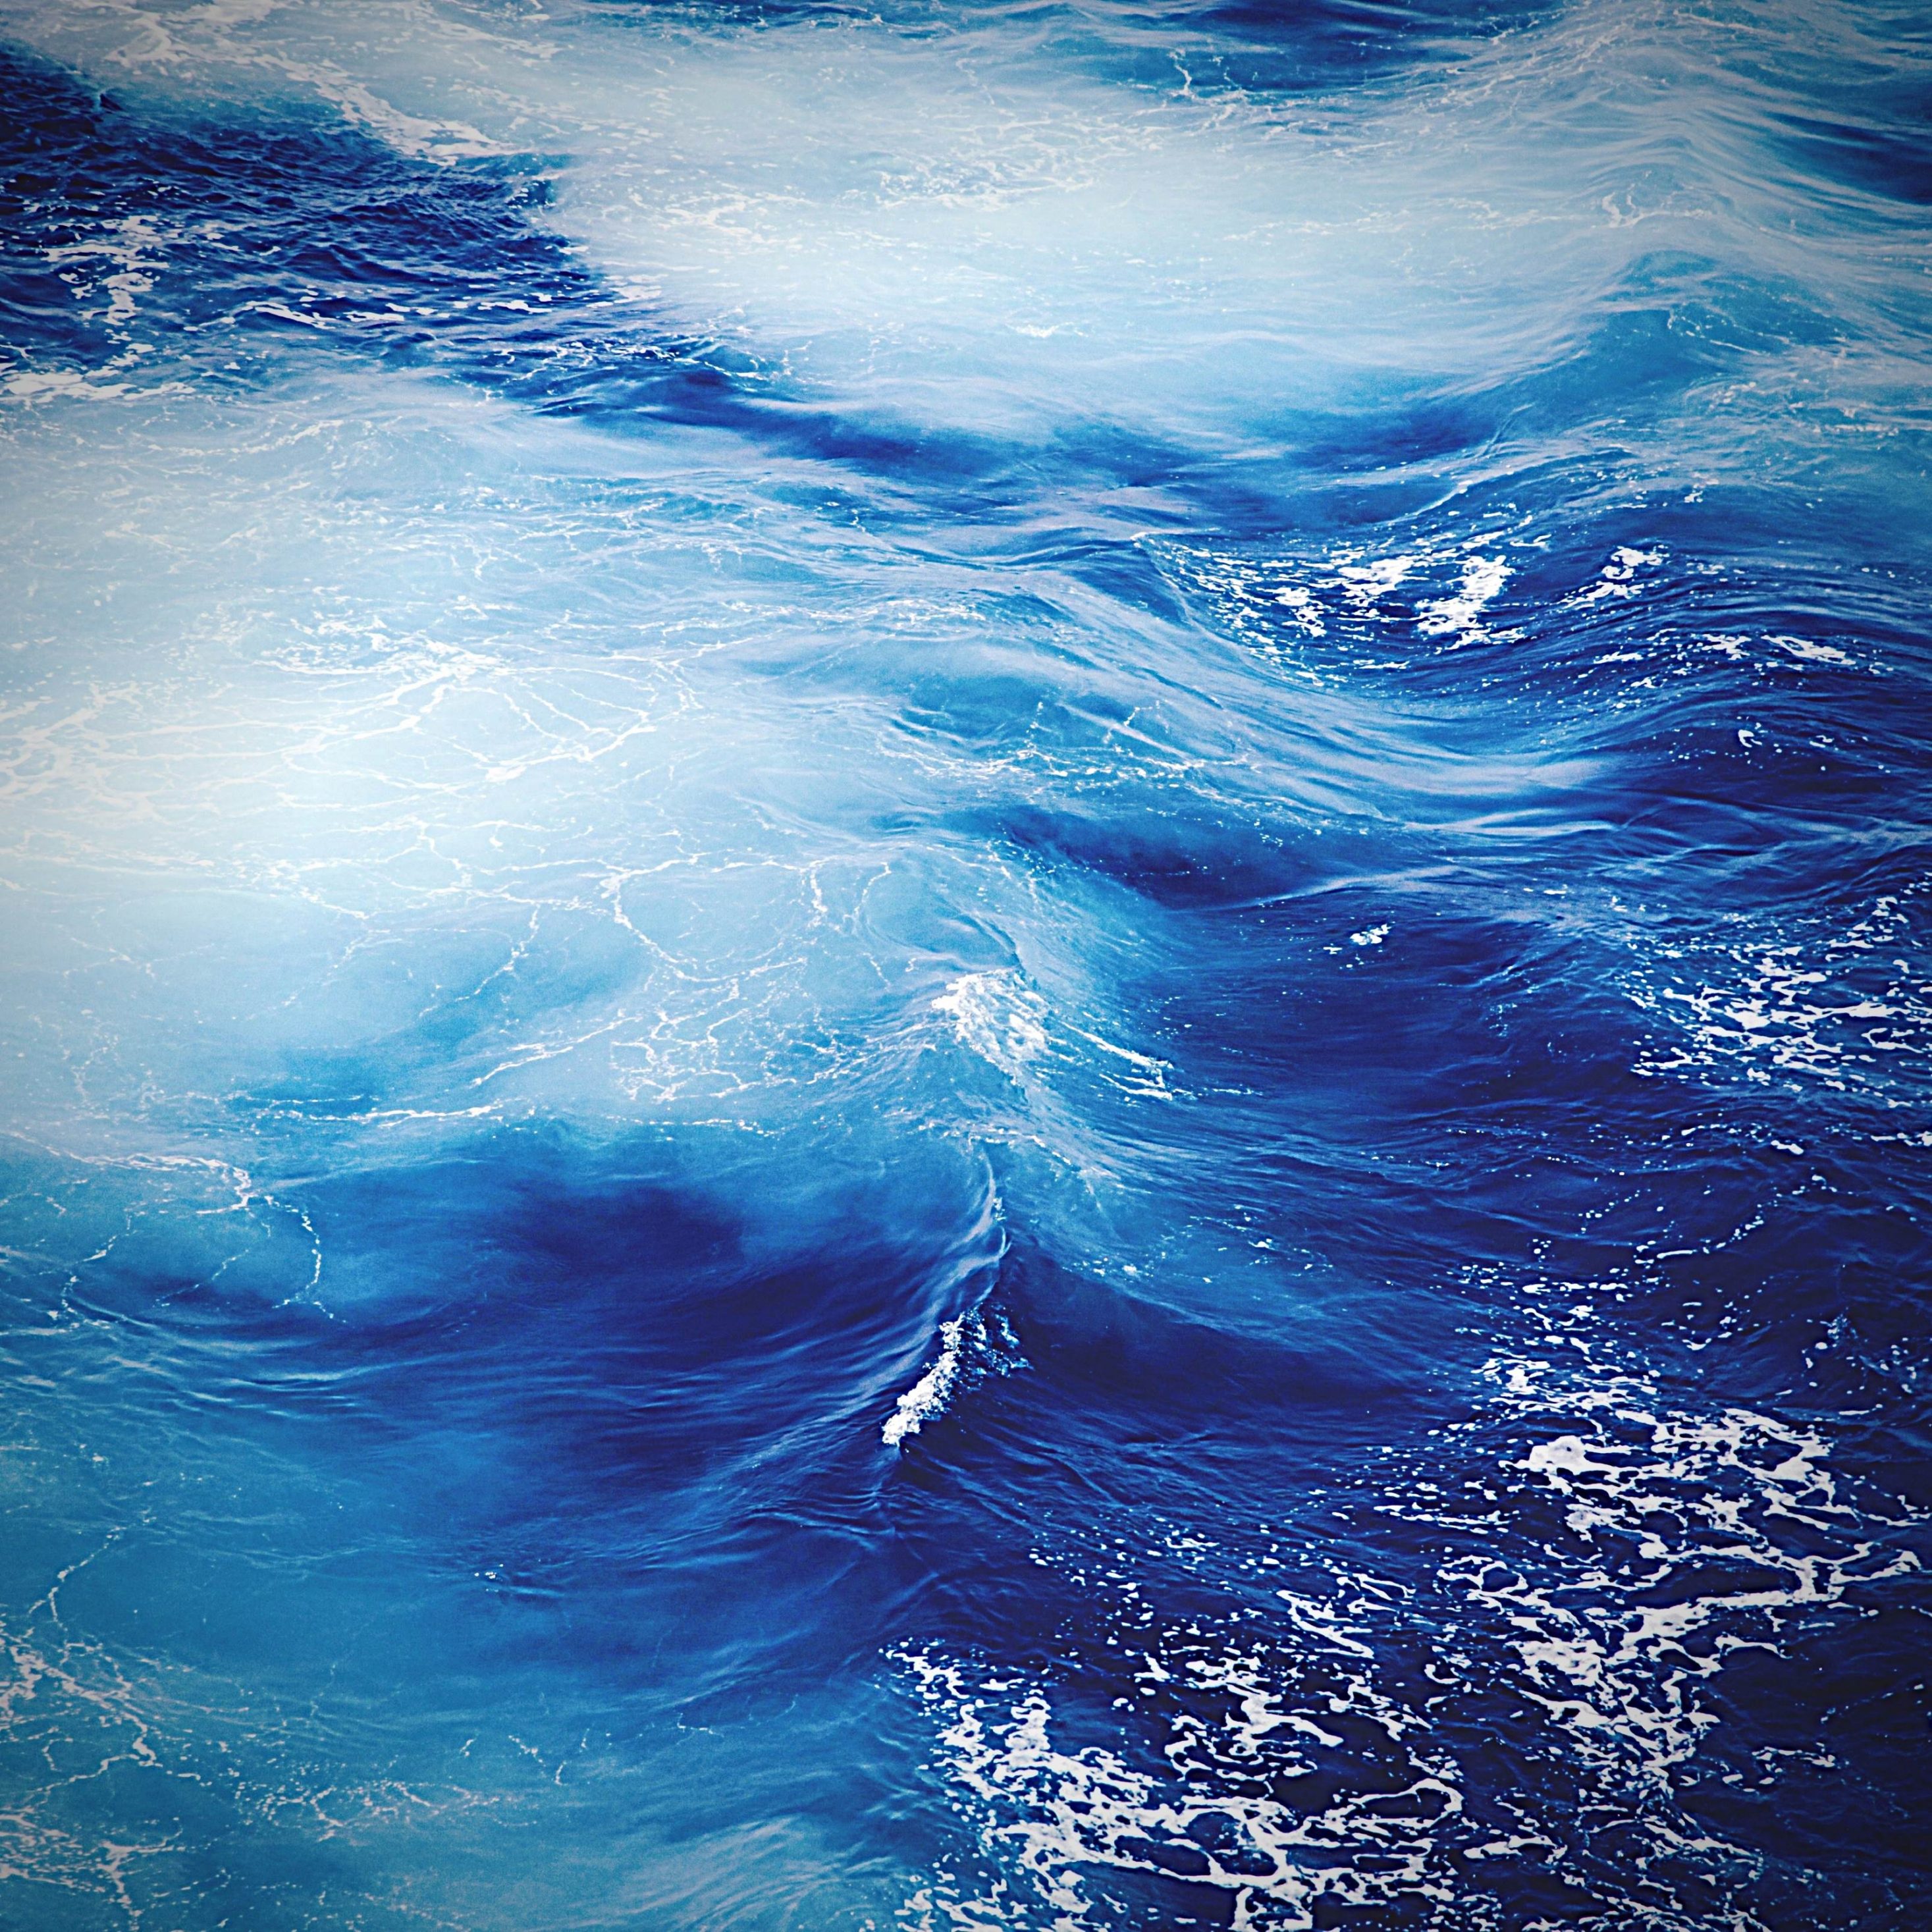 2934x2934 iOS iPad wallpaper 4k Ocean Sea Water Wave Blue iPad Wallpaper 2934x2934 pixels resolution